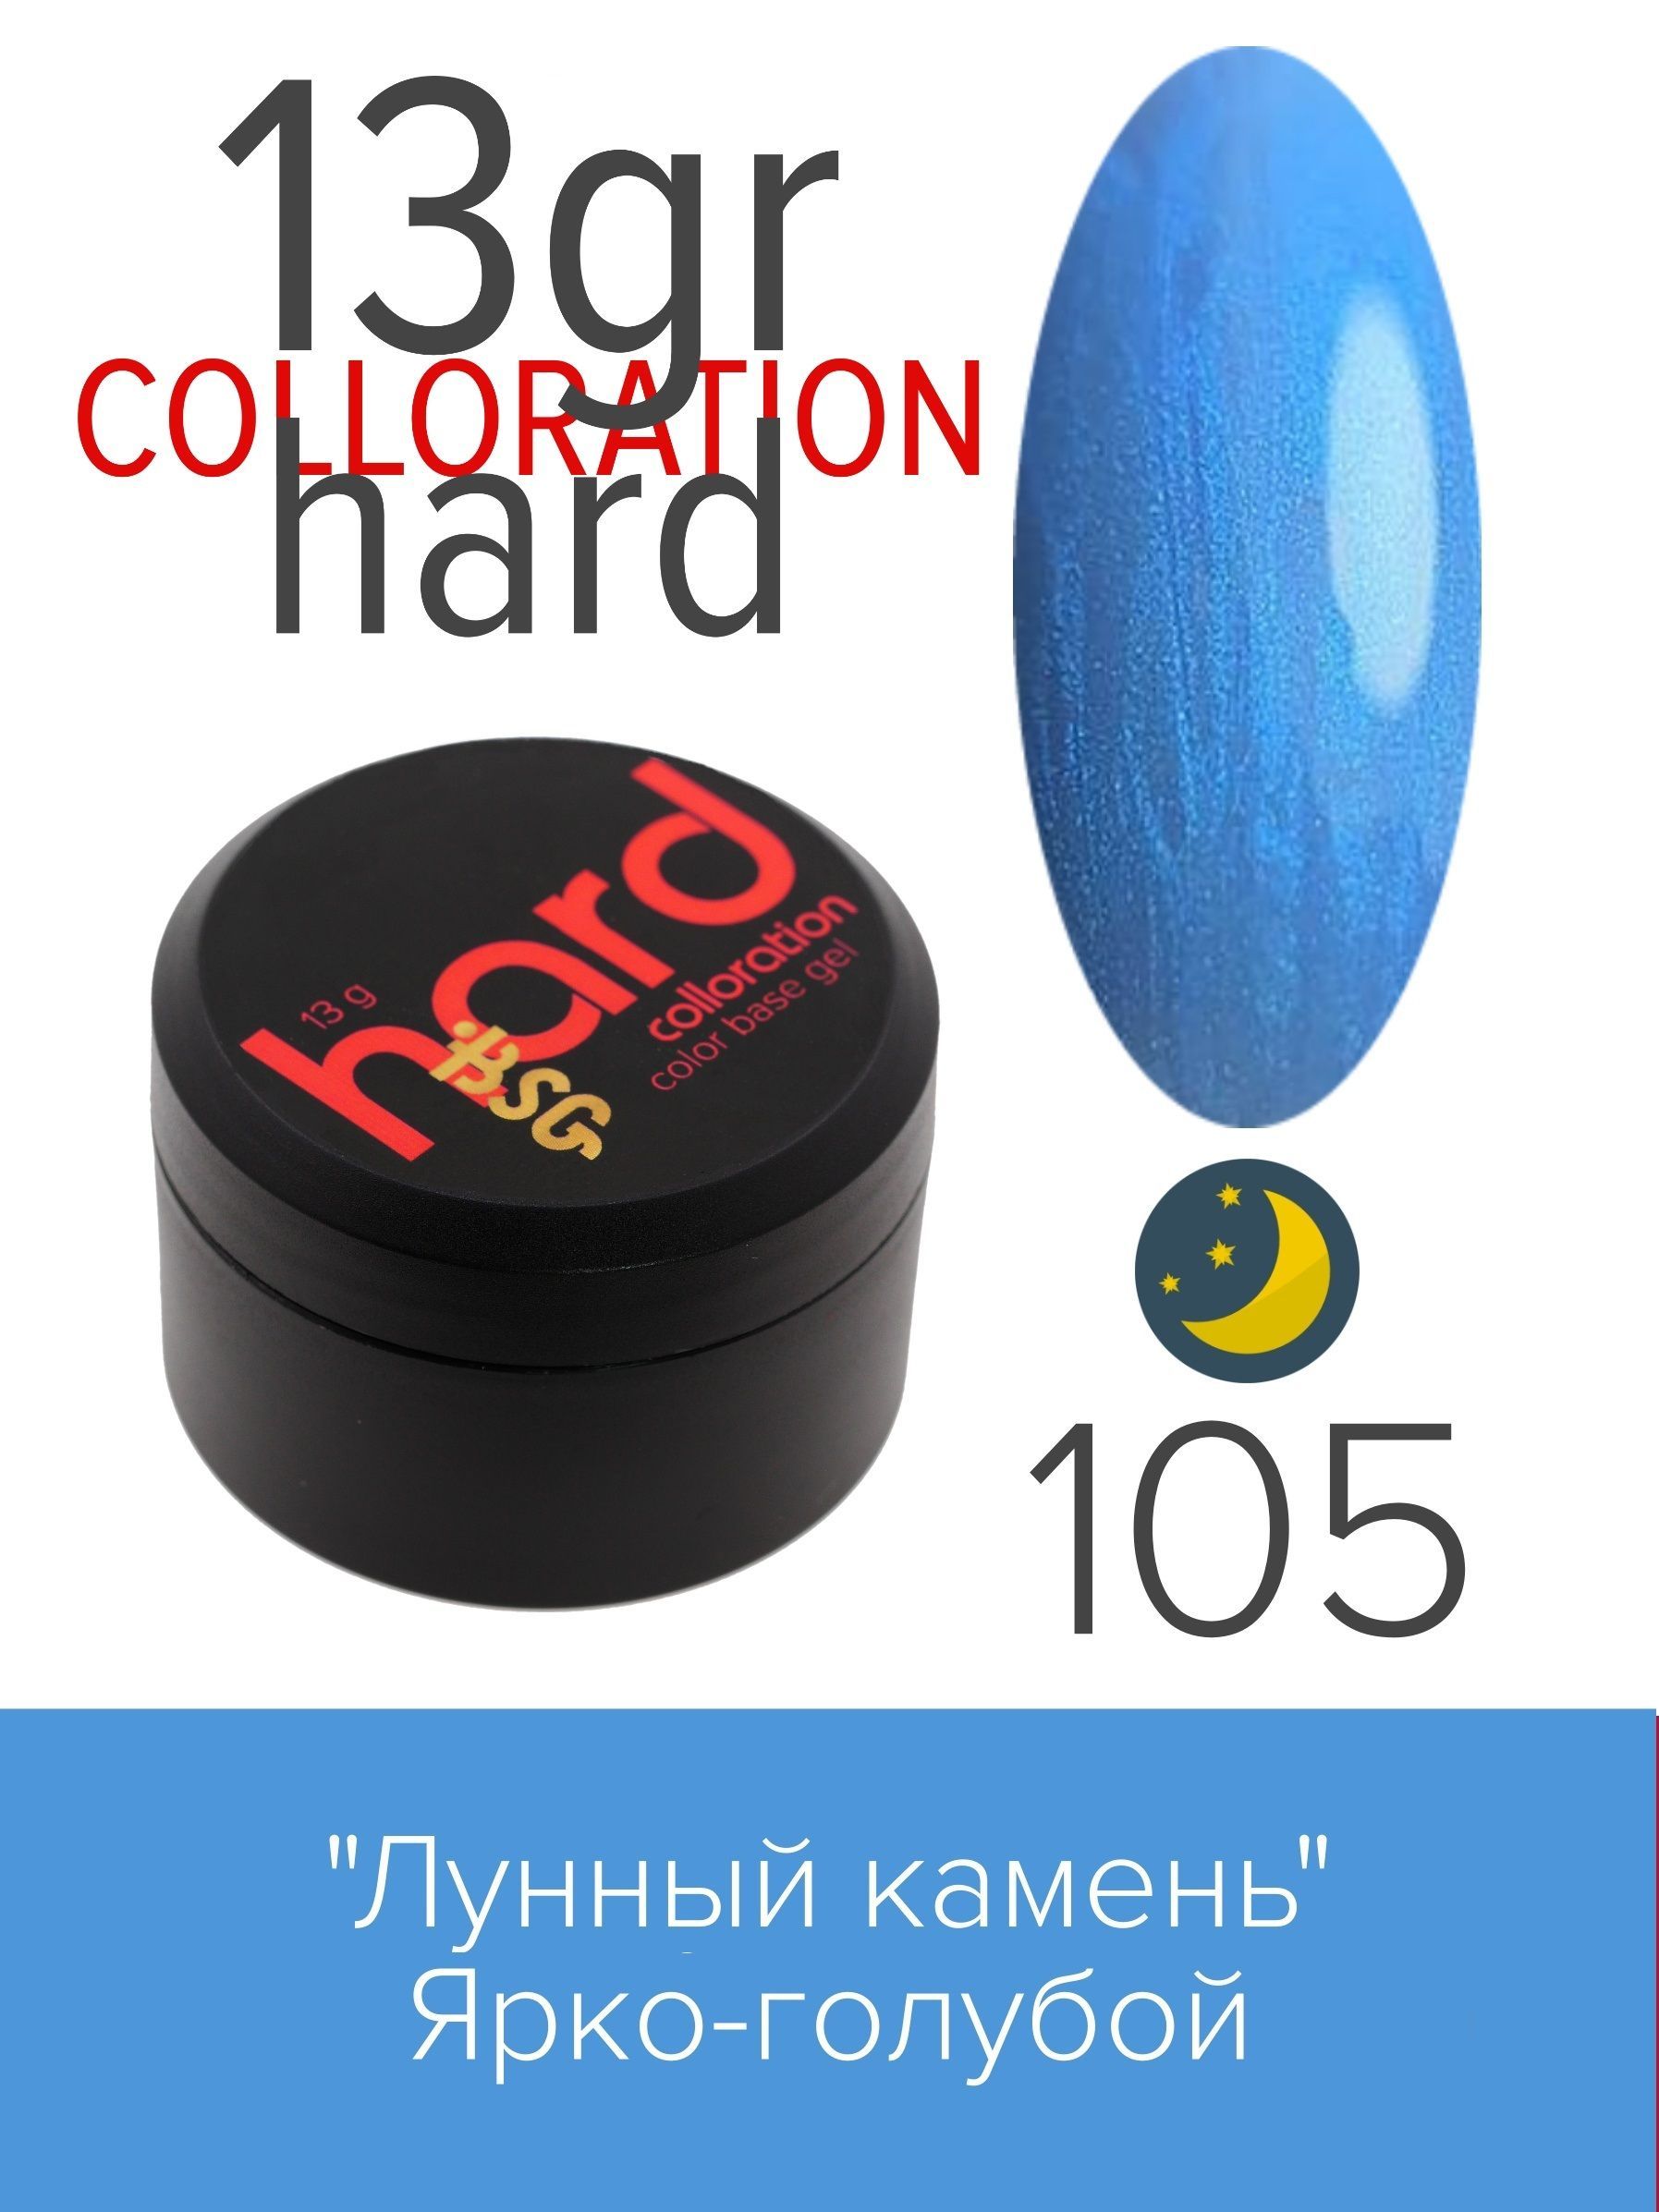 База BSG Colloration Hard цветная жесткая №105 лунный камень у коллинз